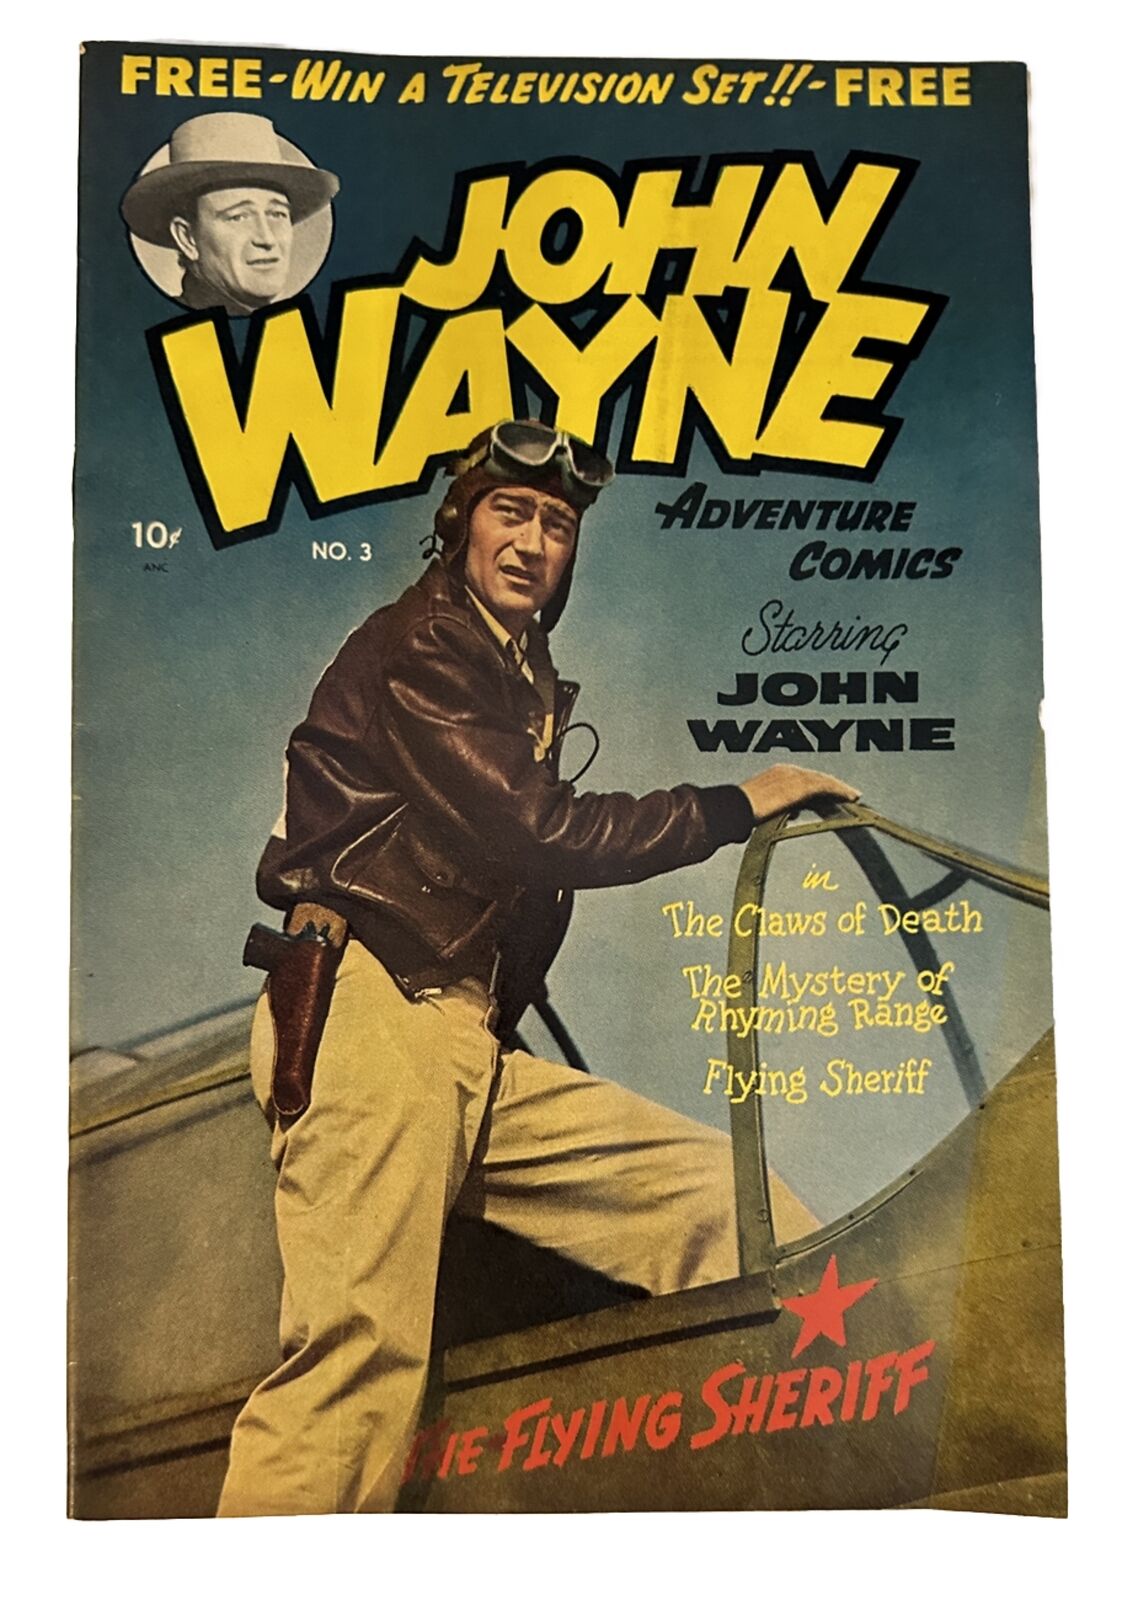 John Wayne Adventure Comics #3 1950 (FN+) Golden Age